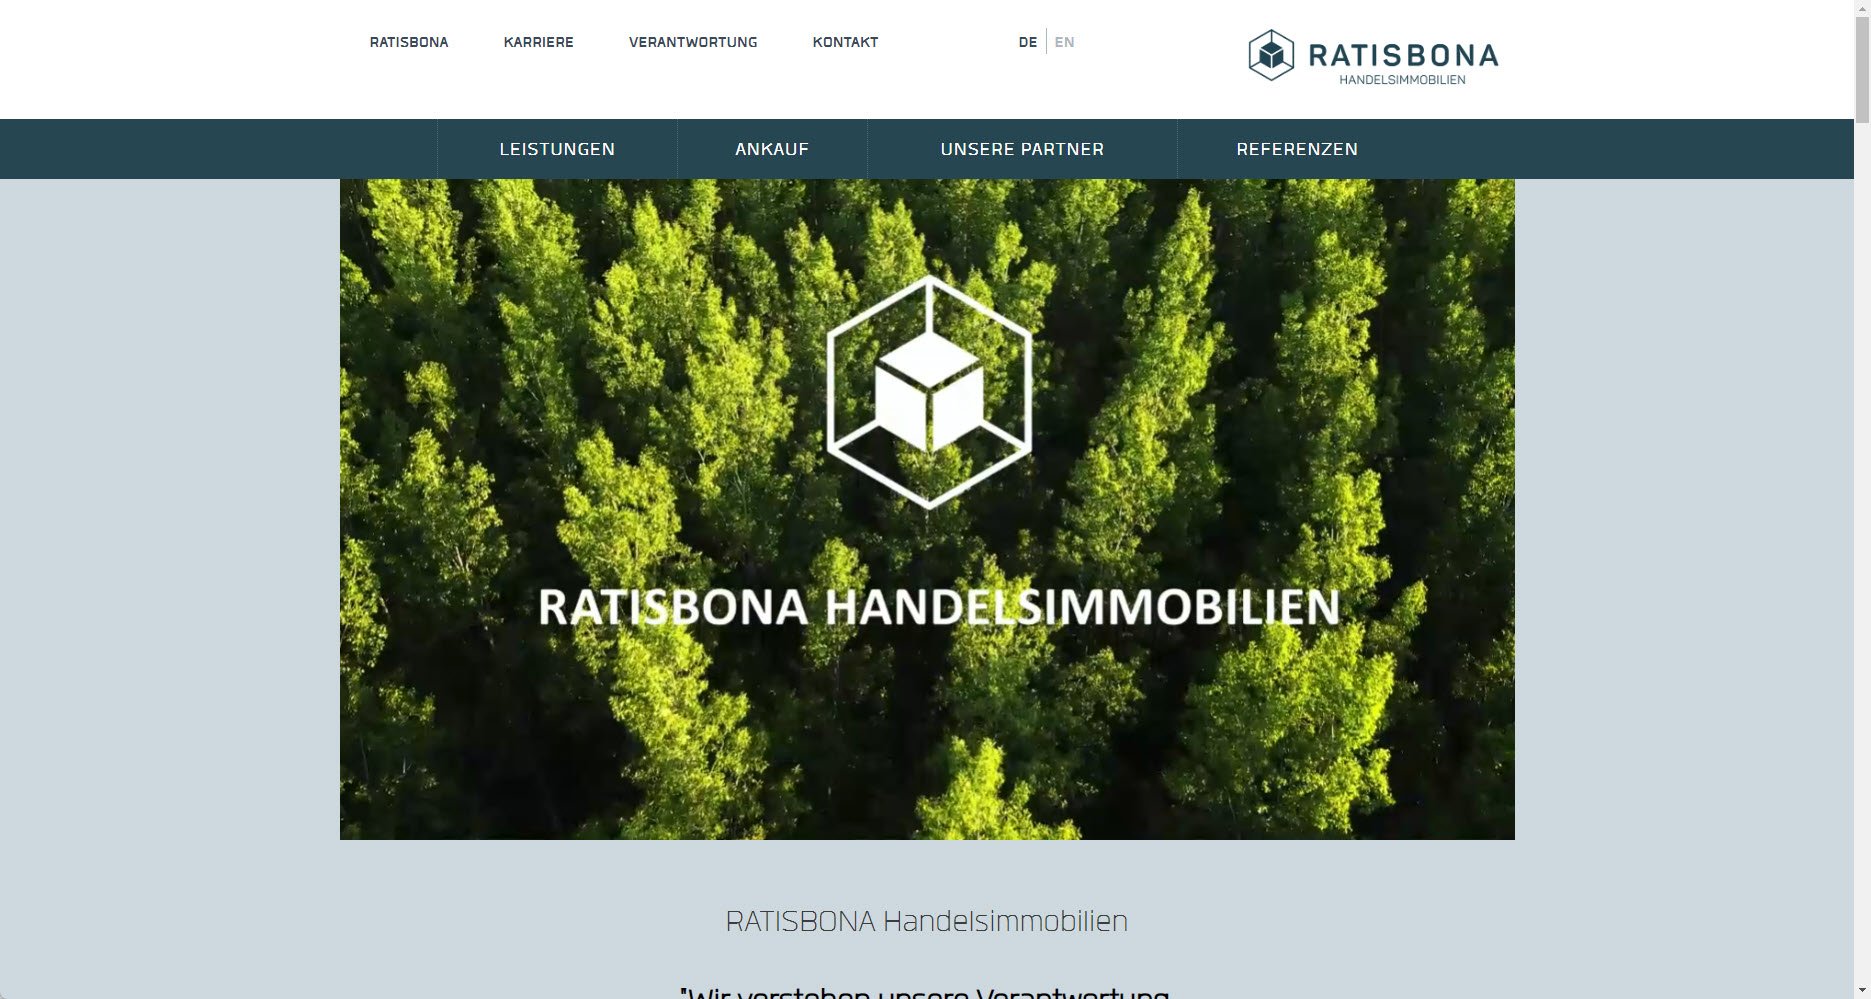 RATISBONA Holding GmbH & CO KG